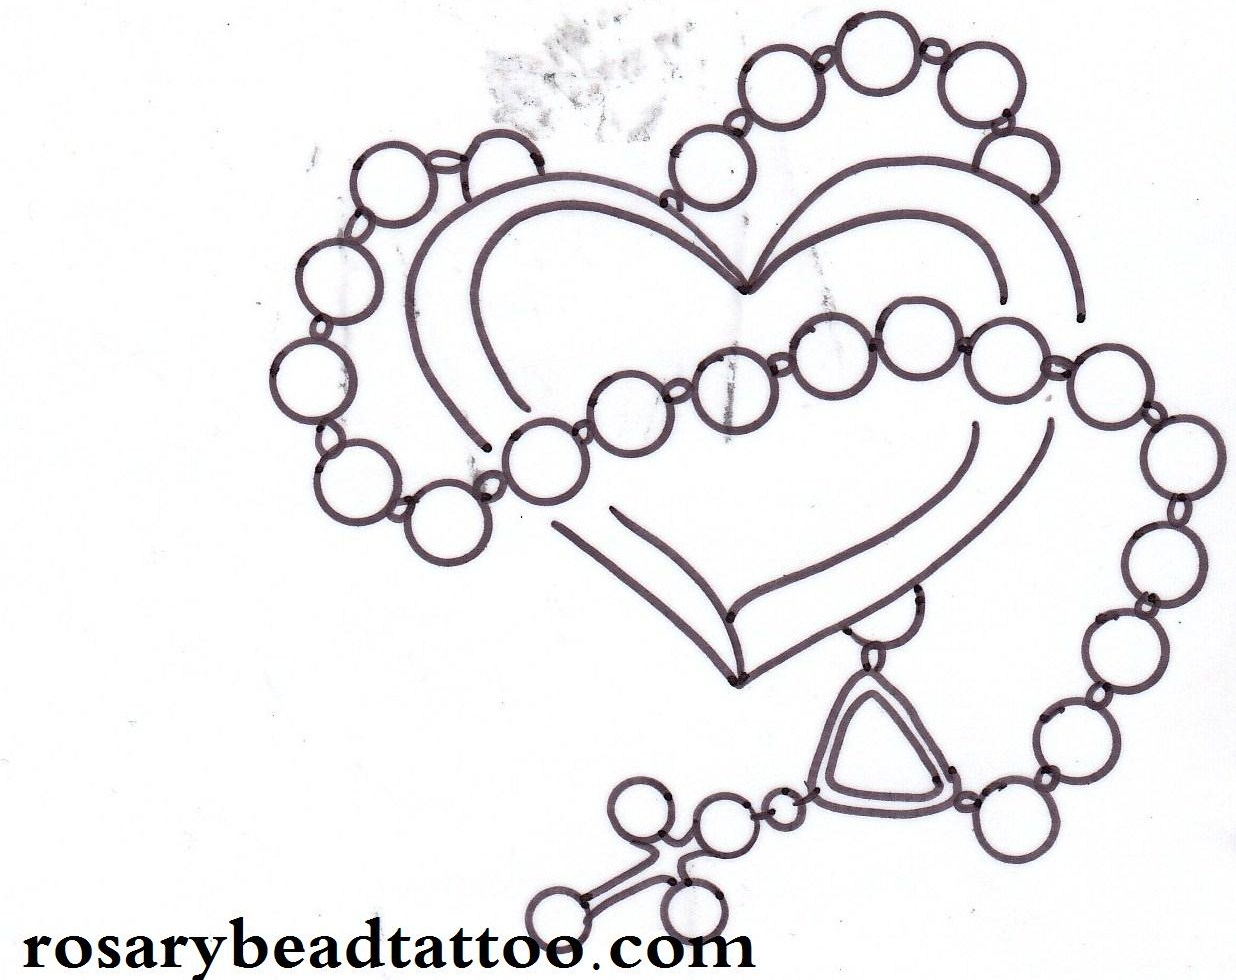 Black Heart With Rosary Cross Tattoo Stencil